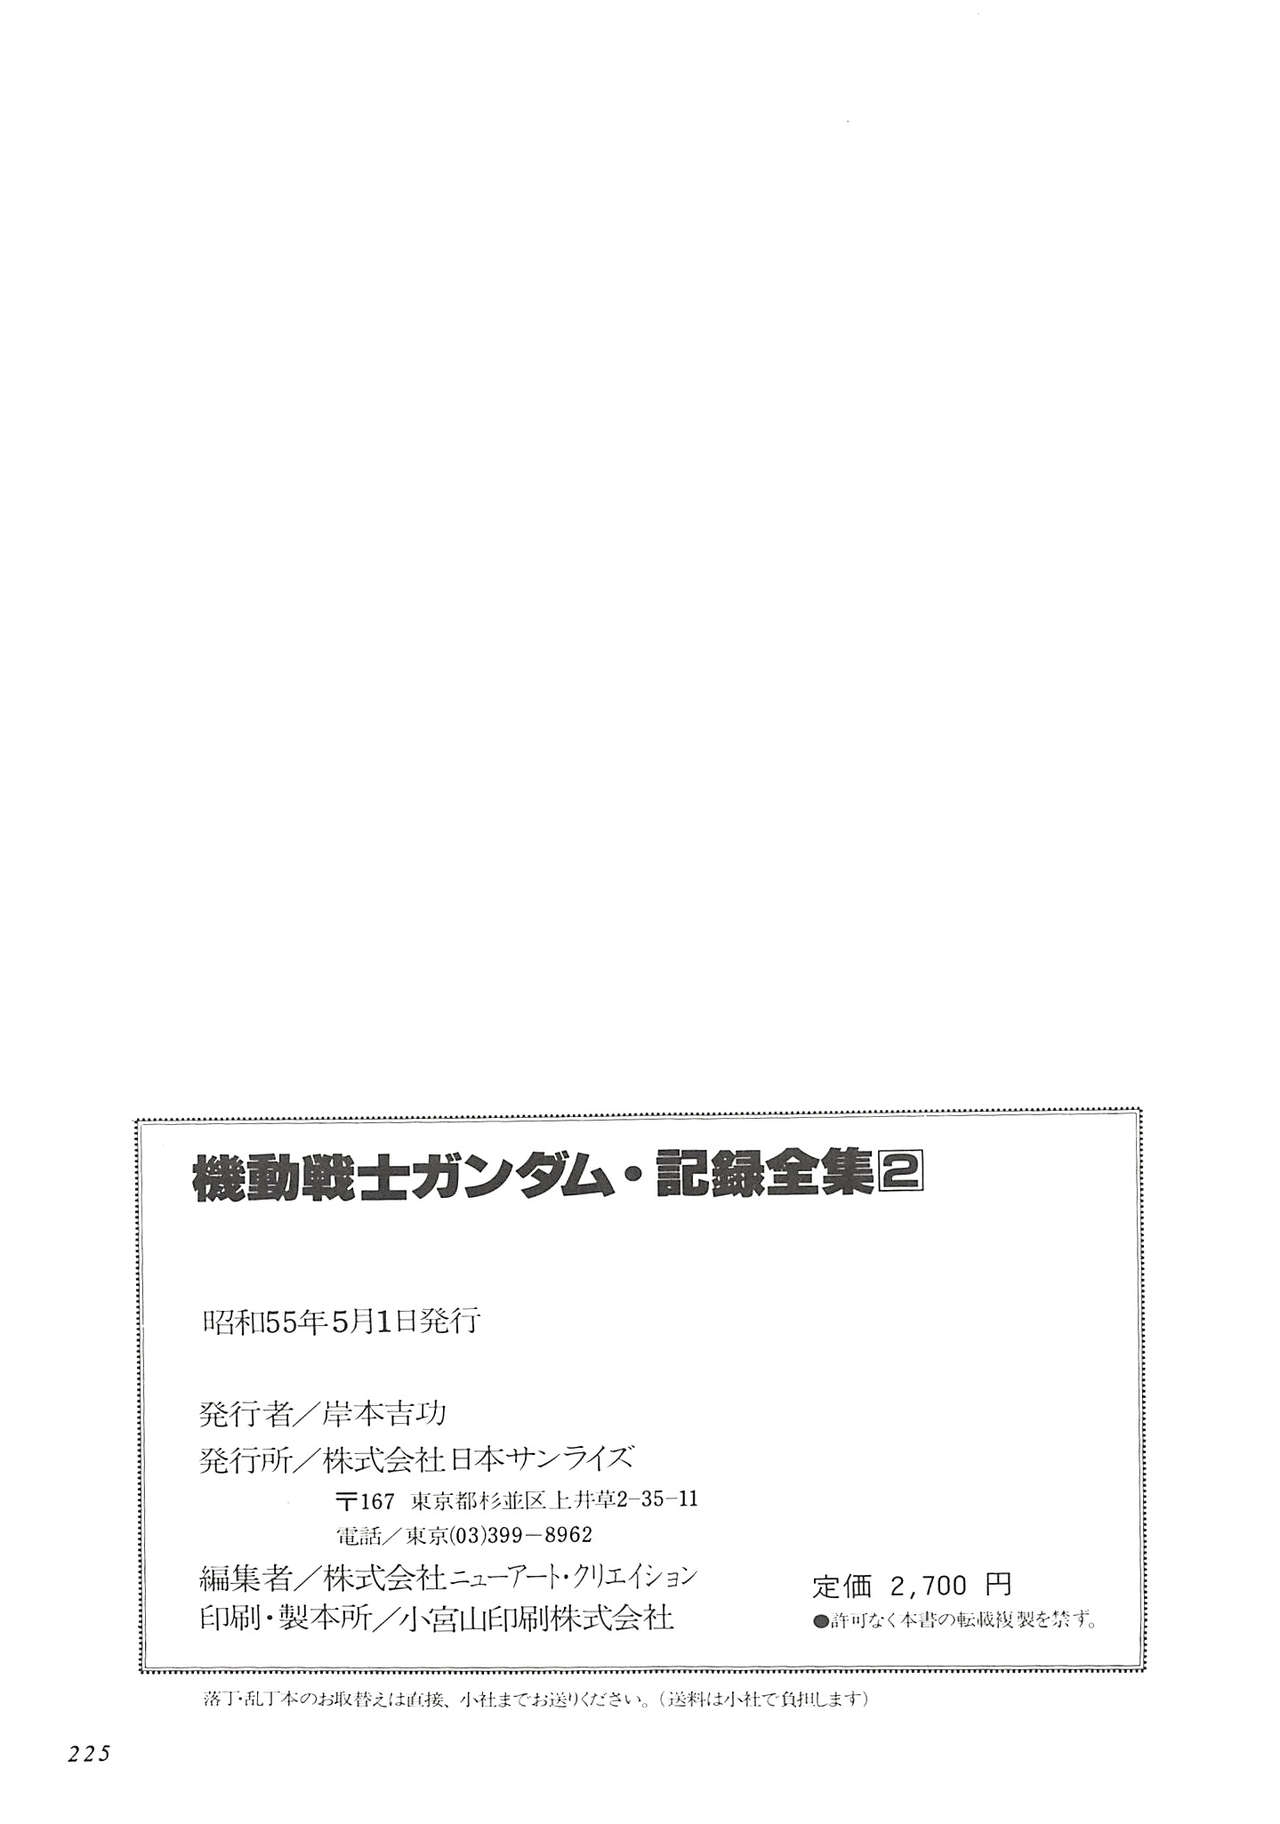 Mobile Suit Gundam - Complete Record 2 224